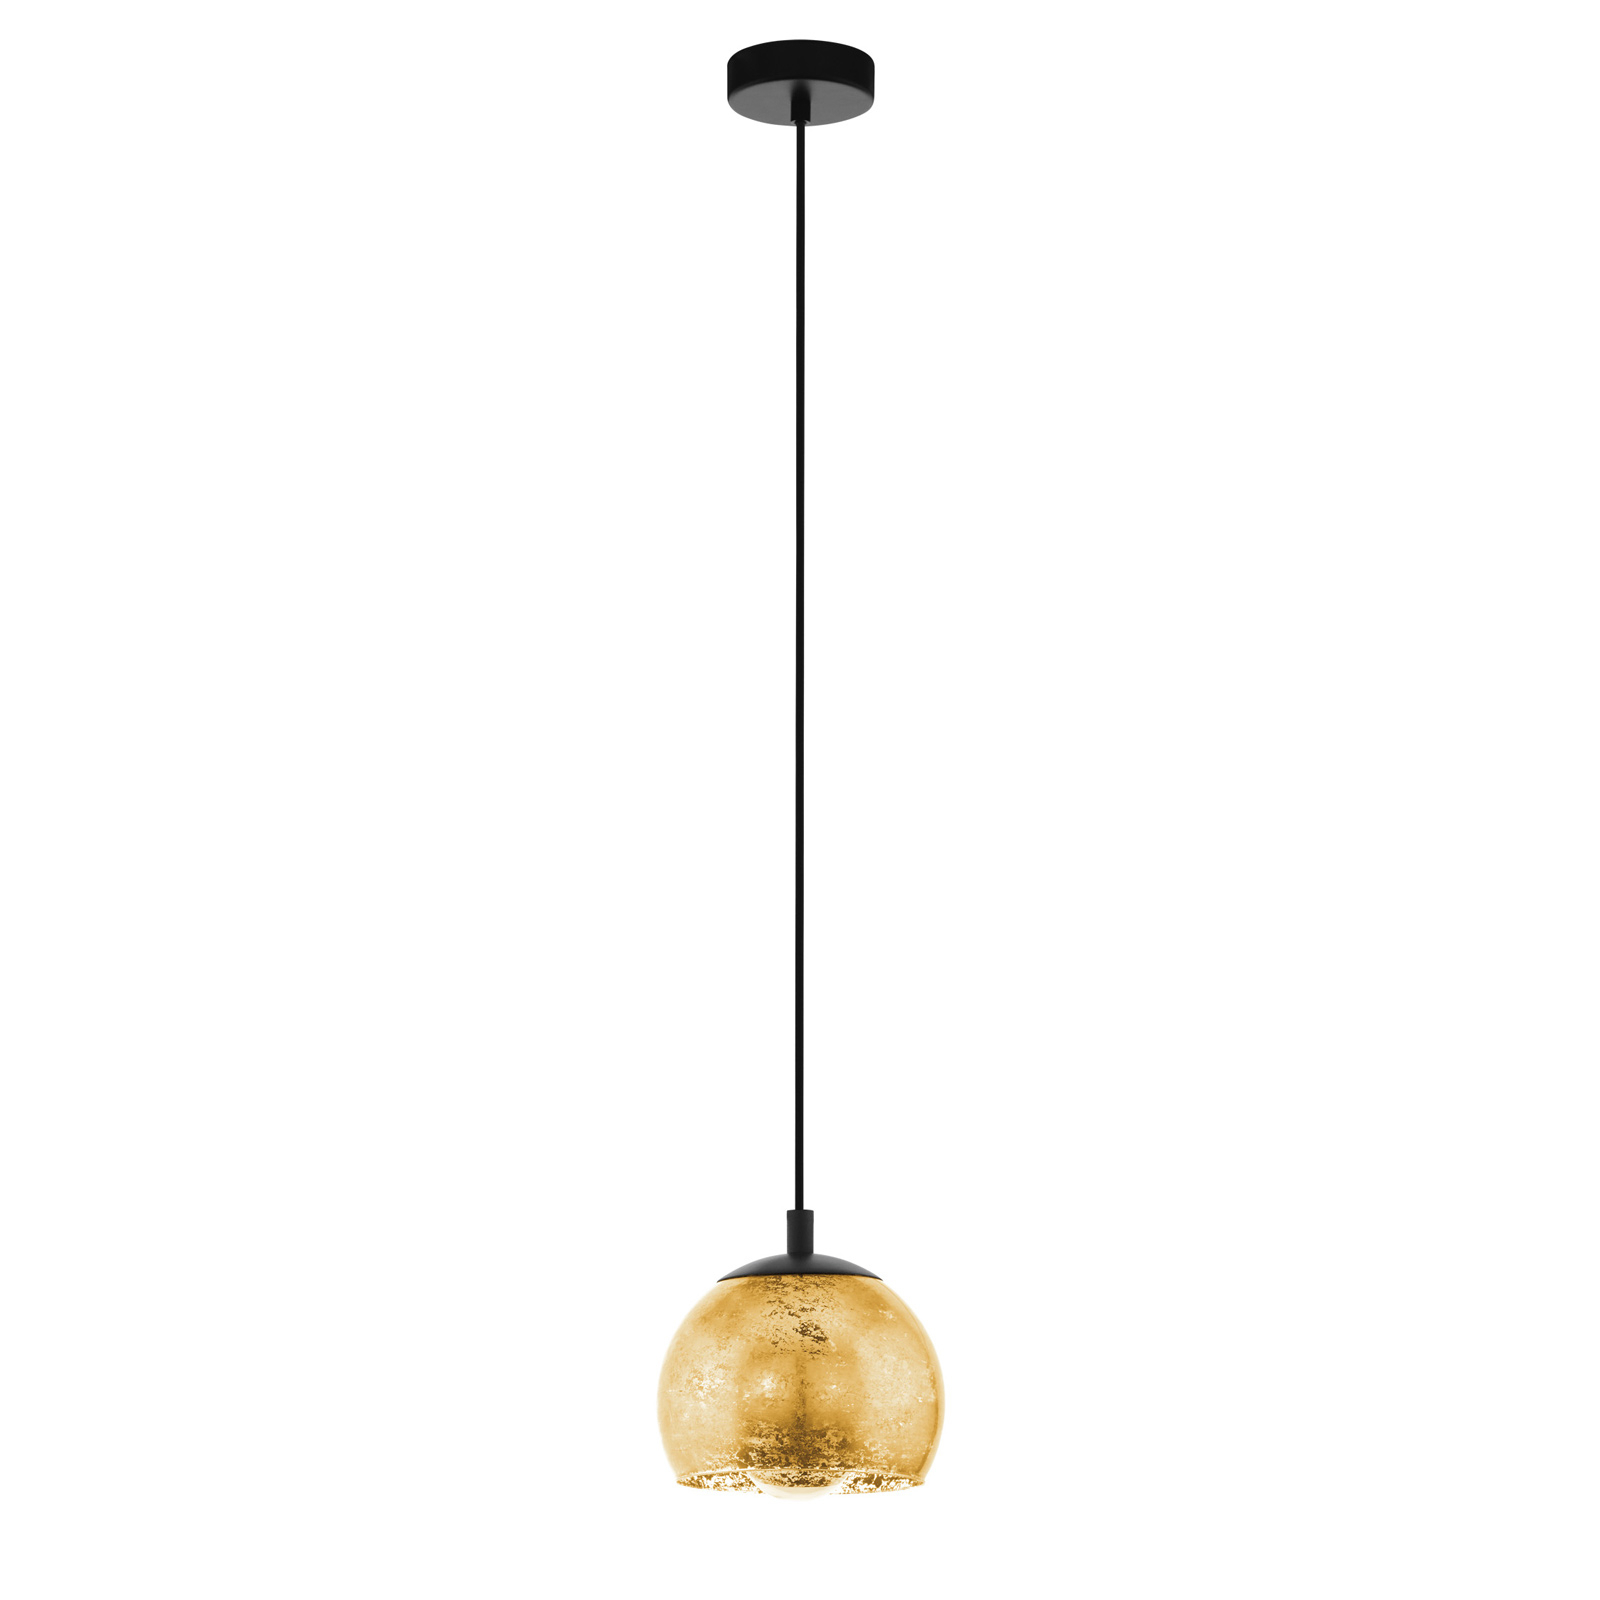 Albaraccin hanging light, one-bulb, Ø 19 cm